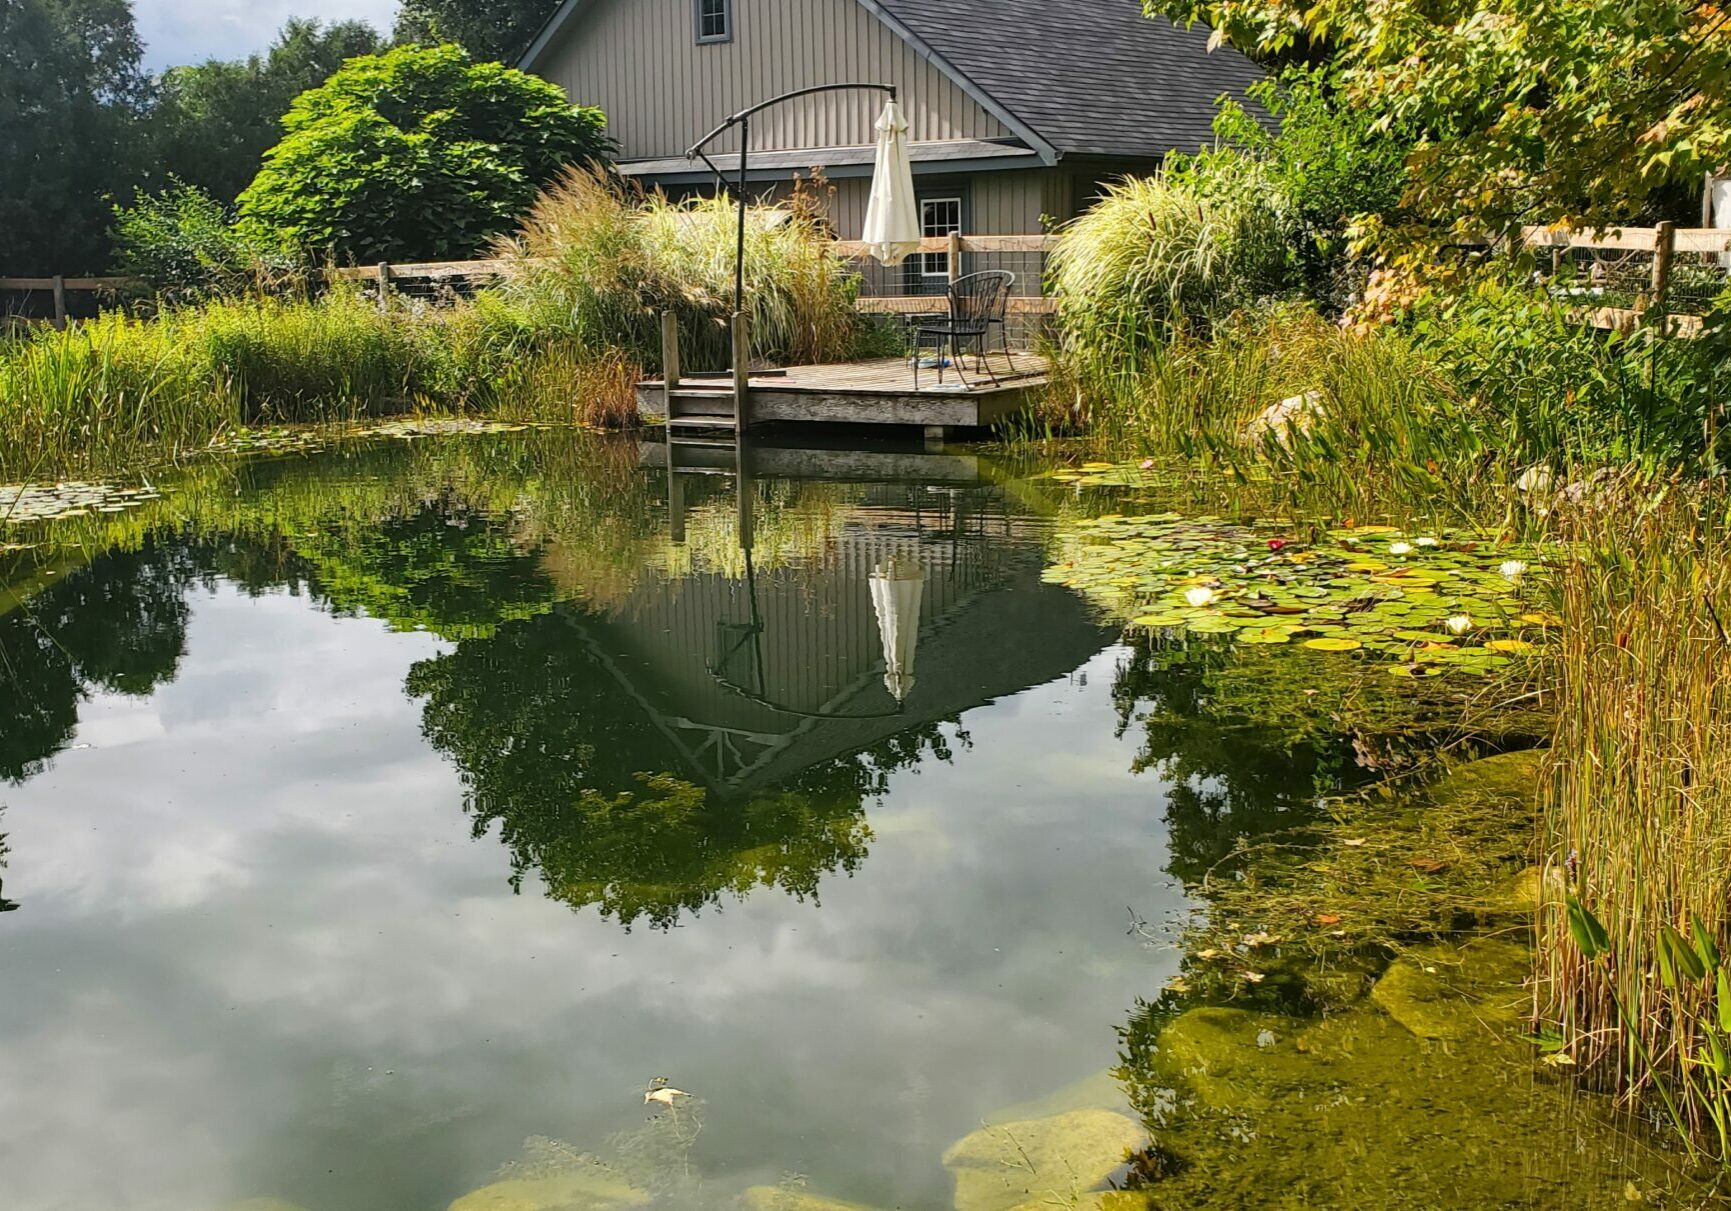 Natural swimming pond